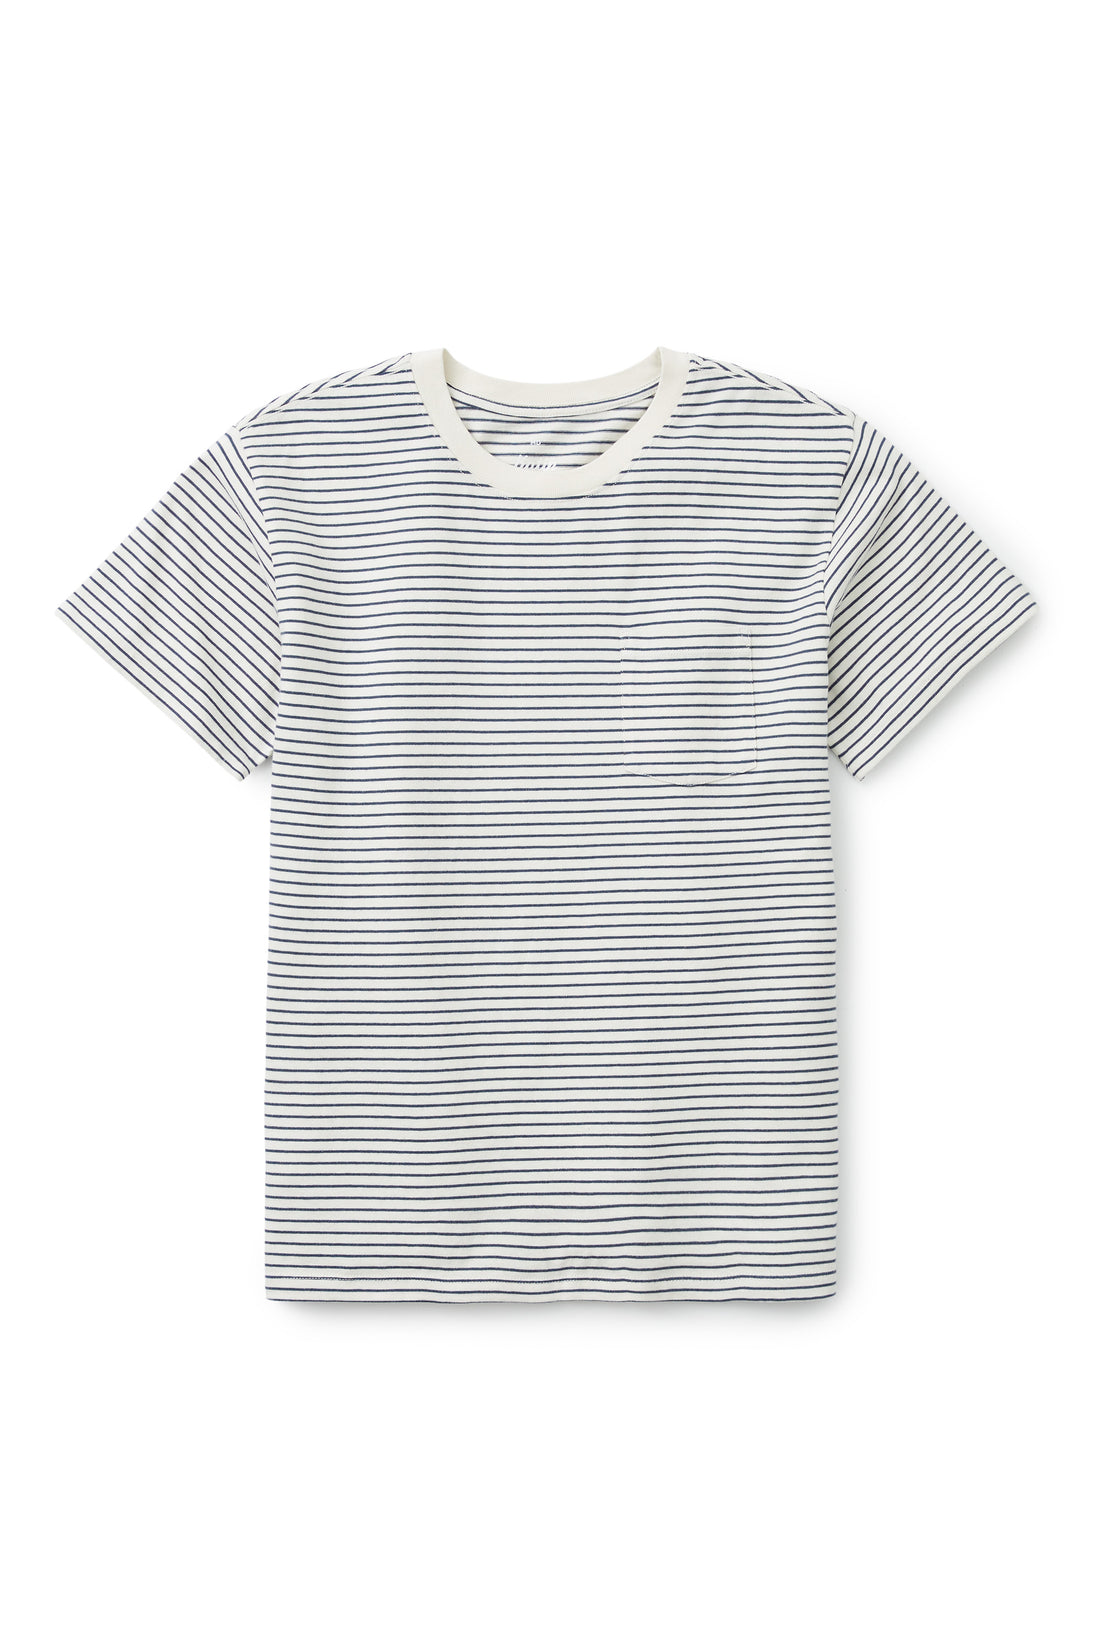 T-Shirt Finley Pocket Blanc Vintage/Bleu Katin